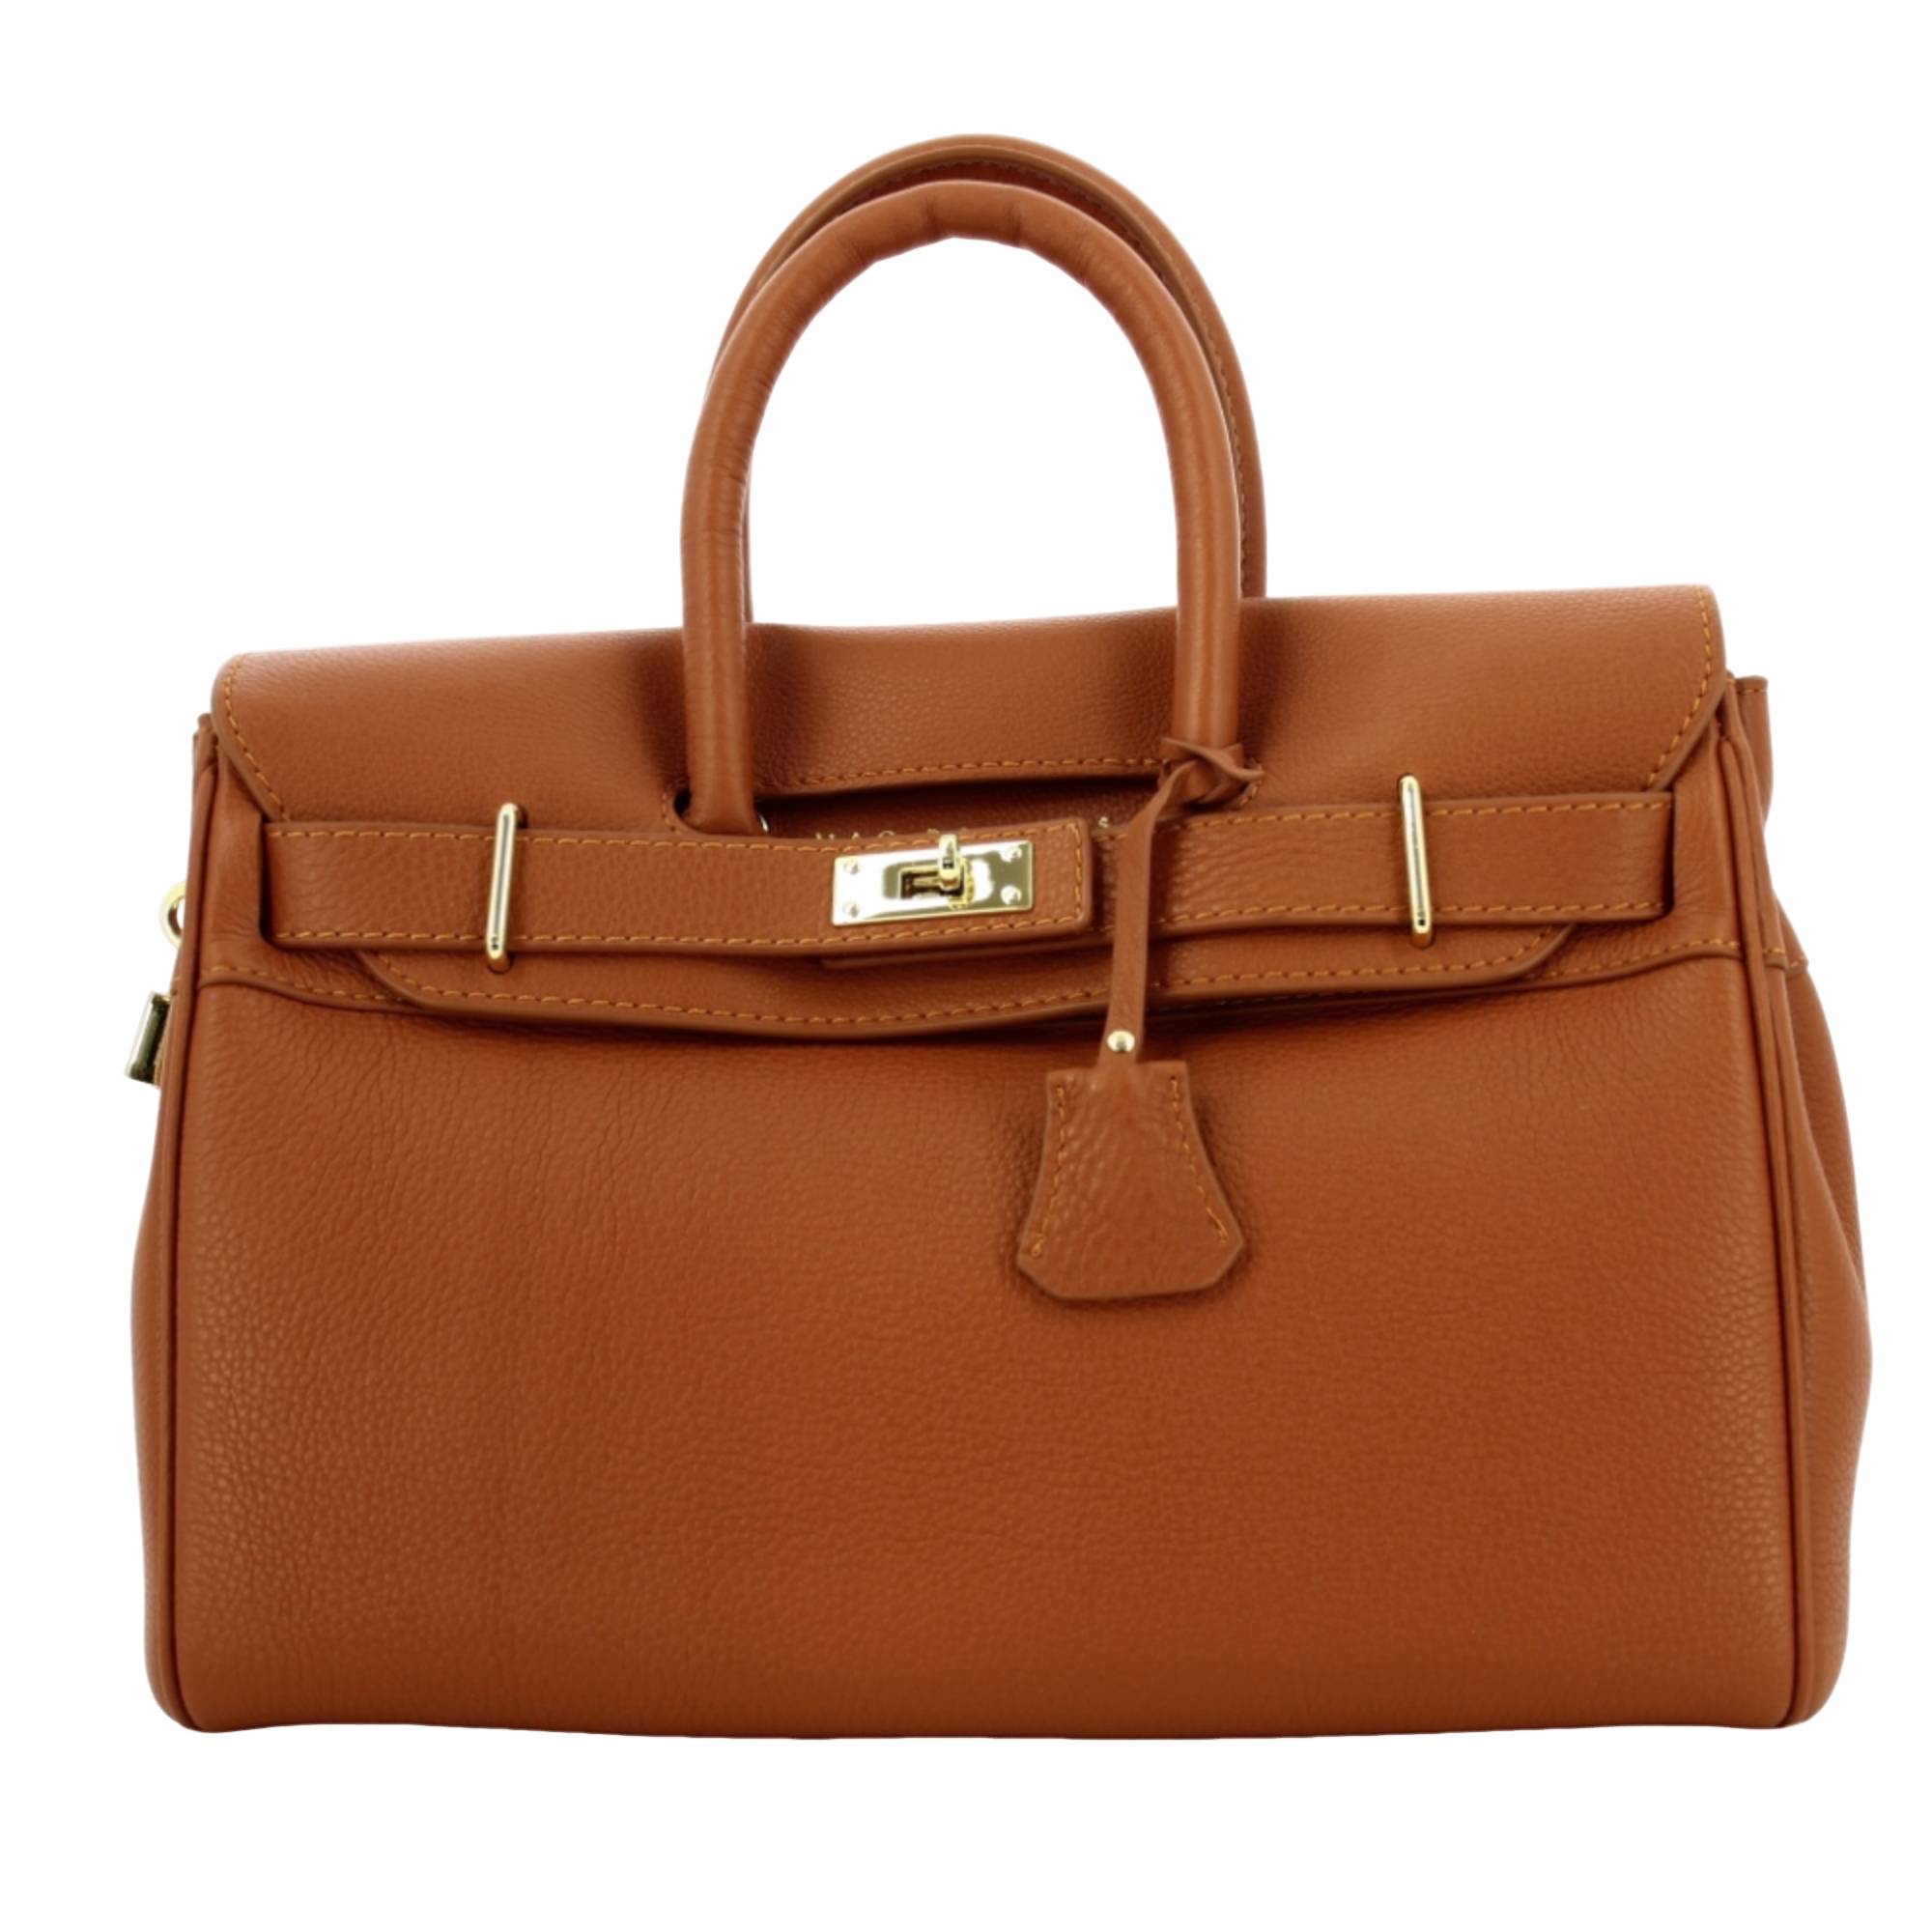 Joli authentique grand sac à main HUGO BOSS cuir vintage bag /